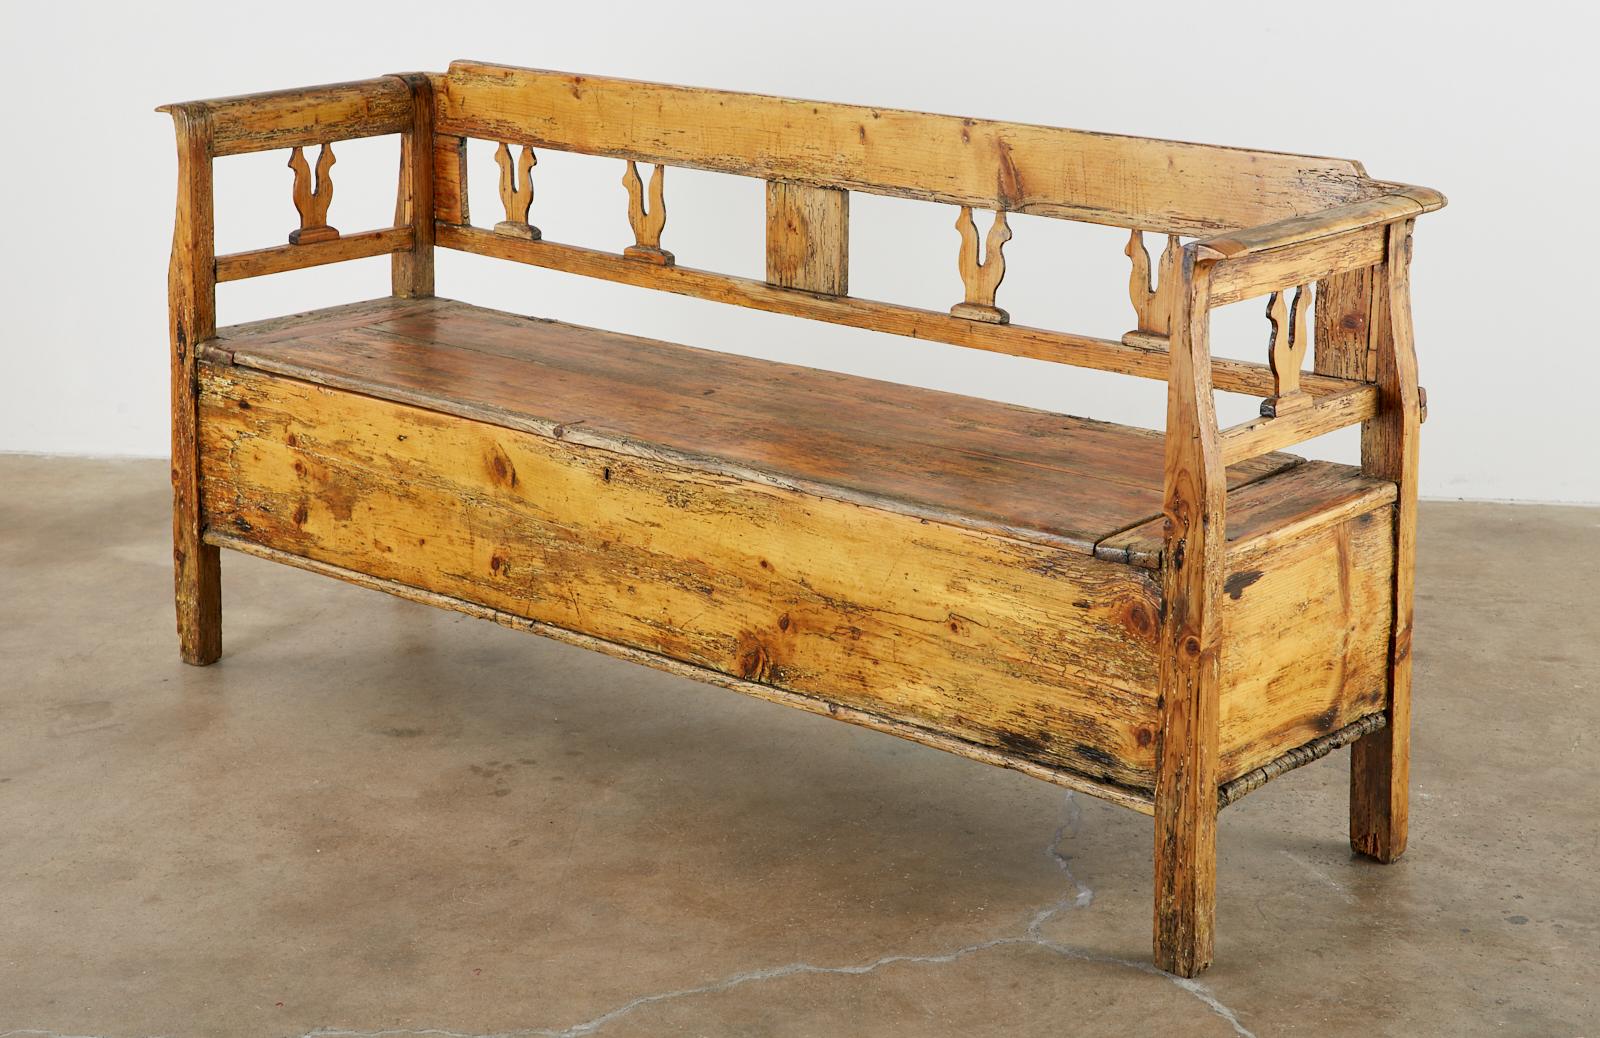 Hand-Crafted 19th Century Swedish Pine Bench with Storage